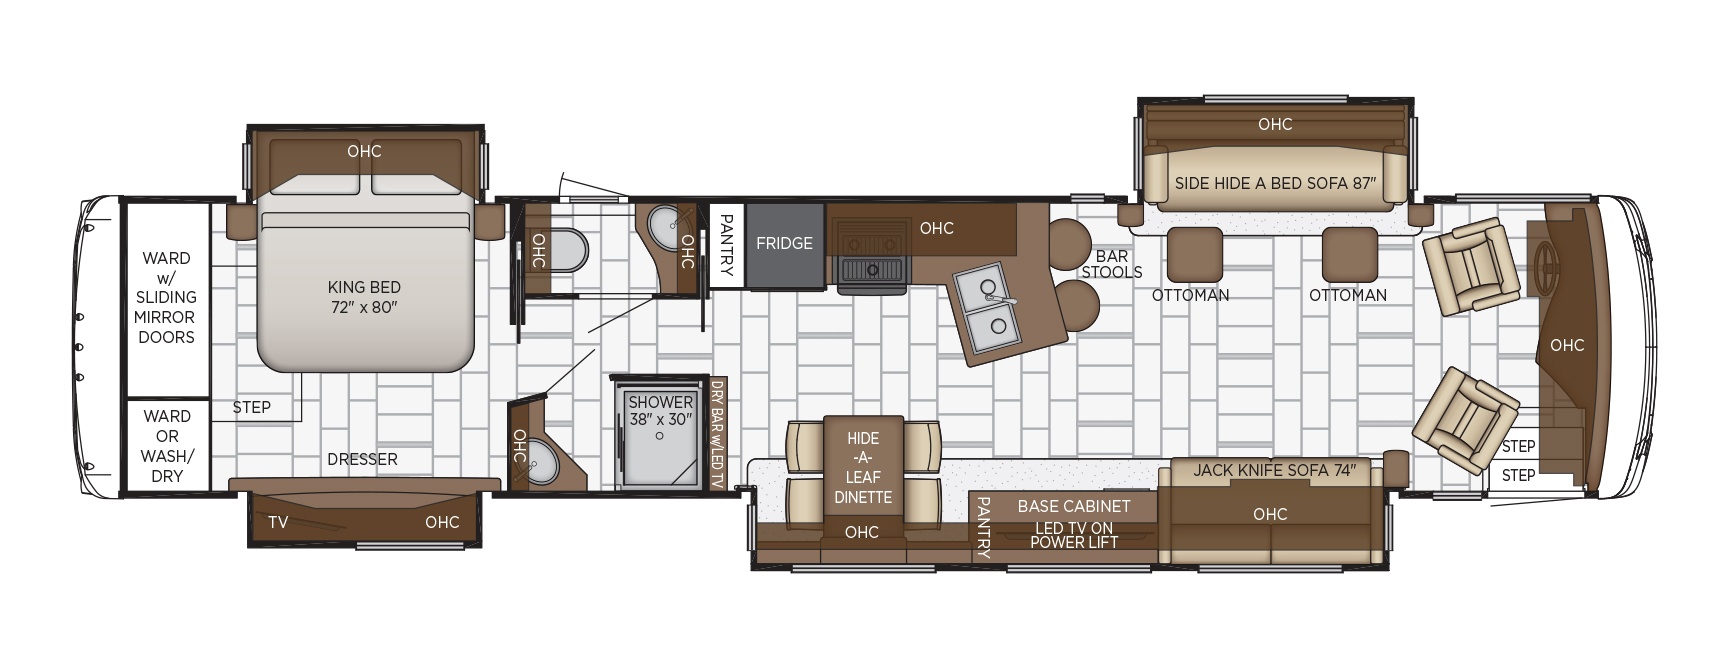 Ventana floor plan options Newmar